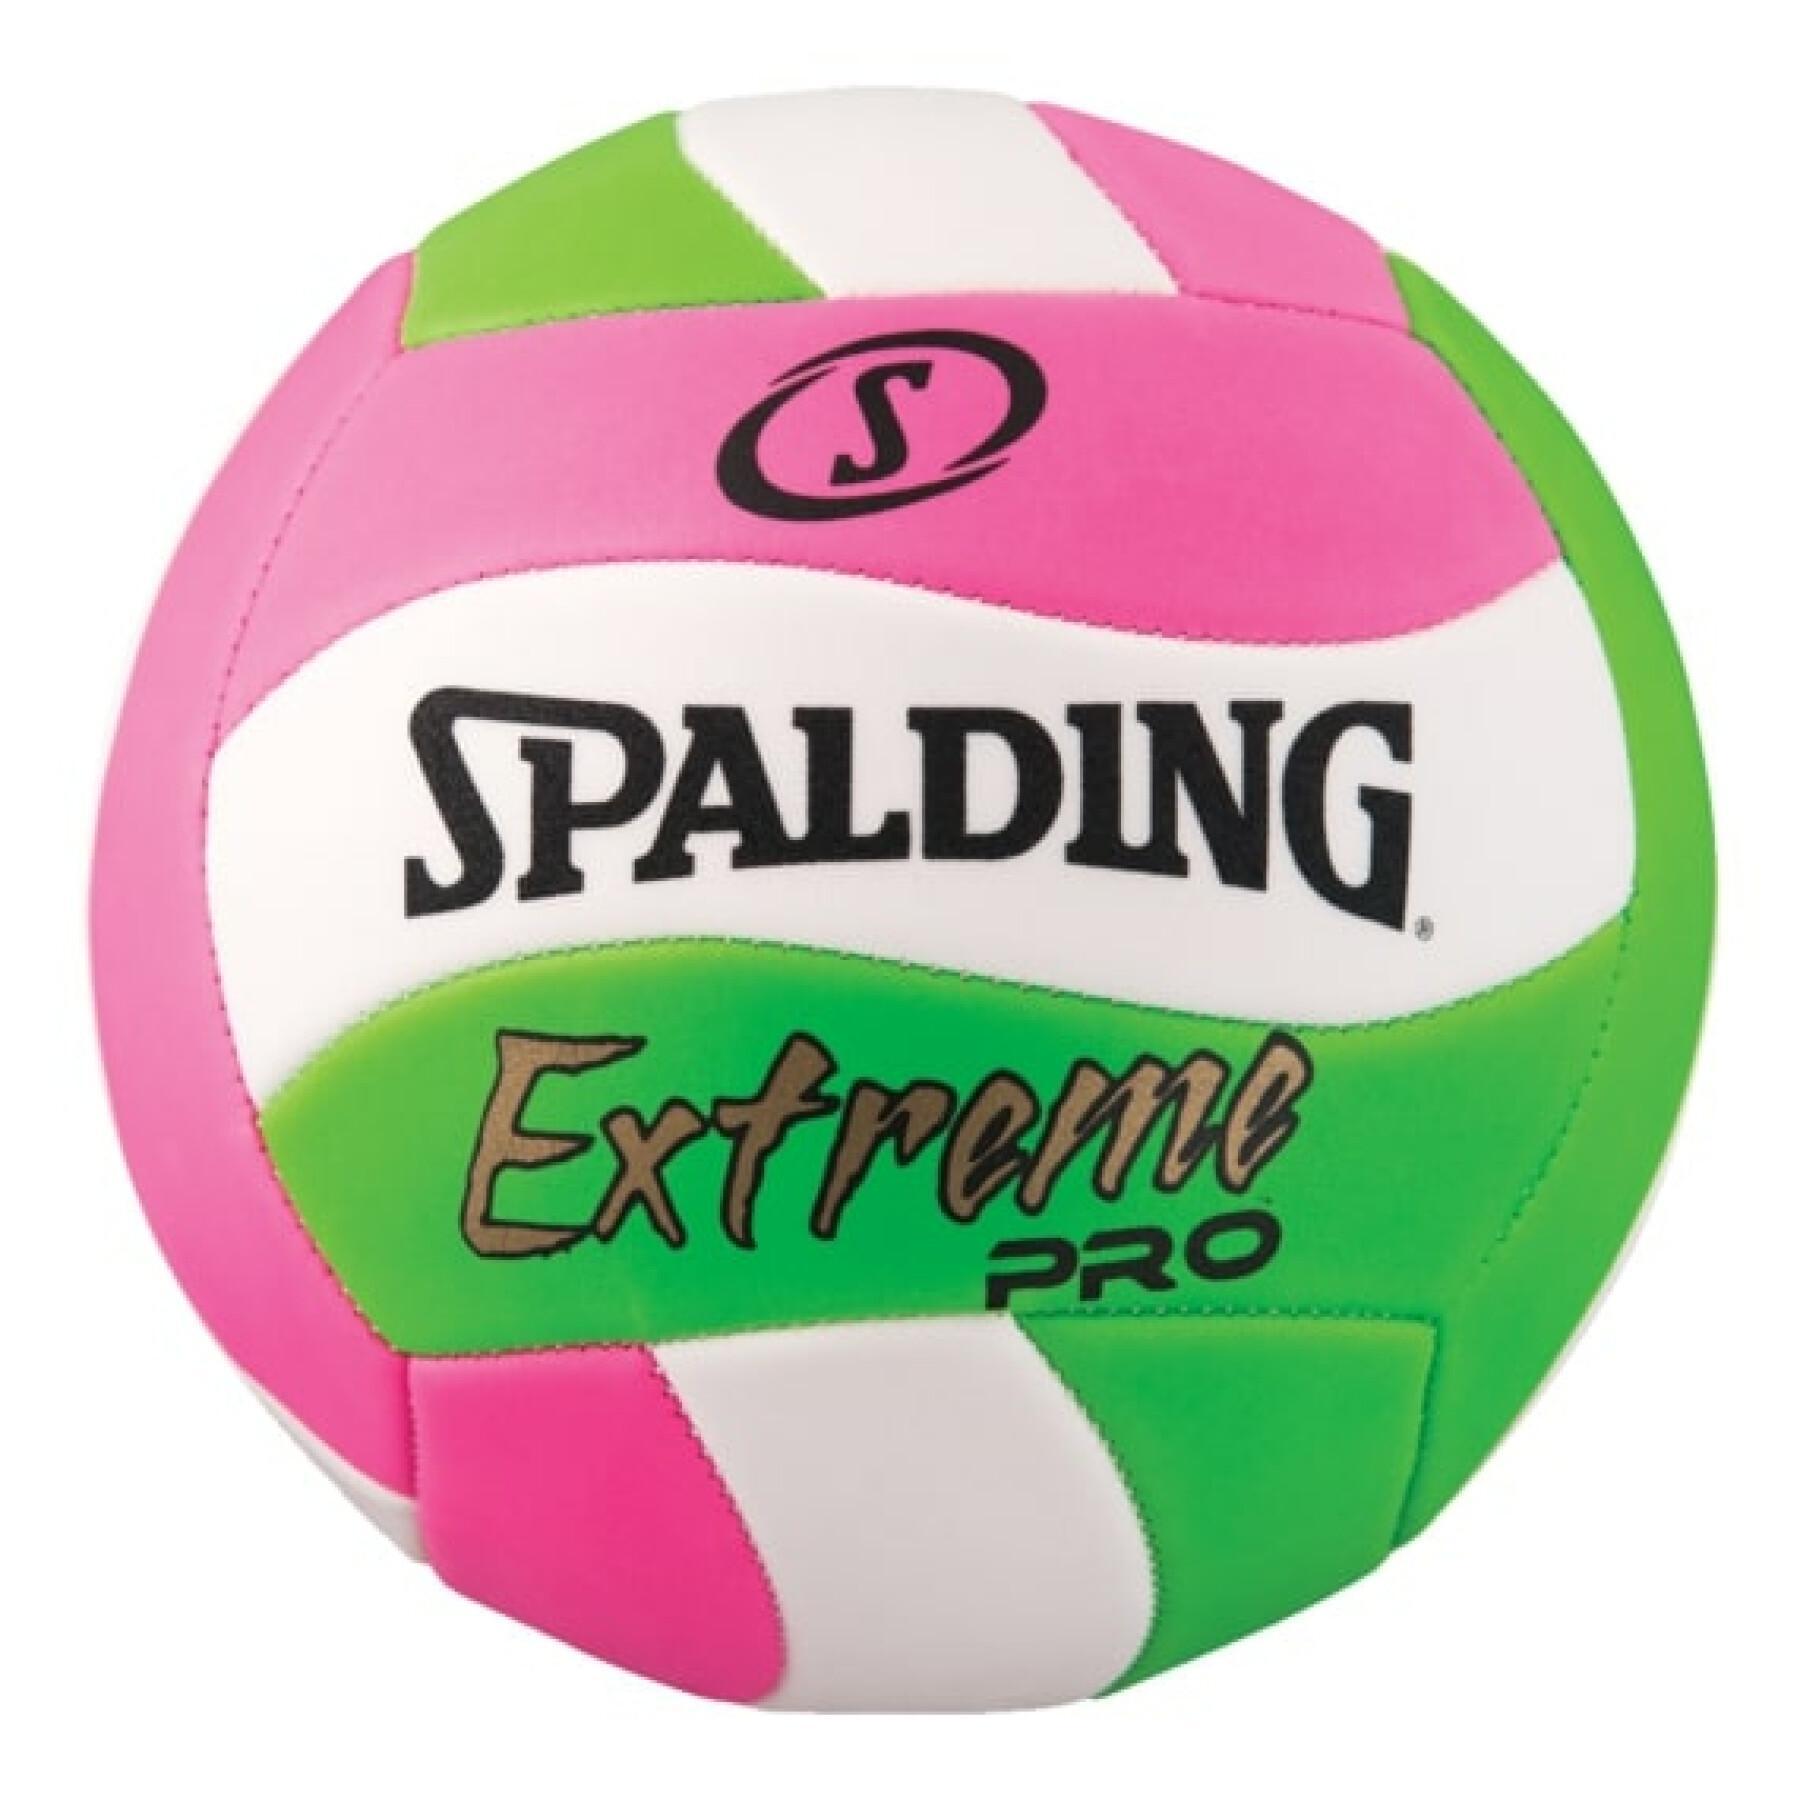 Ballong Spalding Extreme Pro